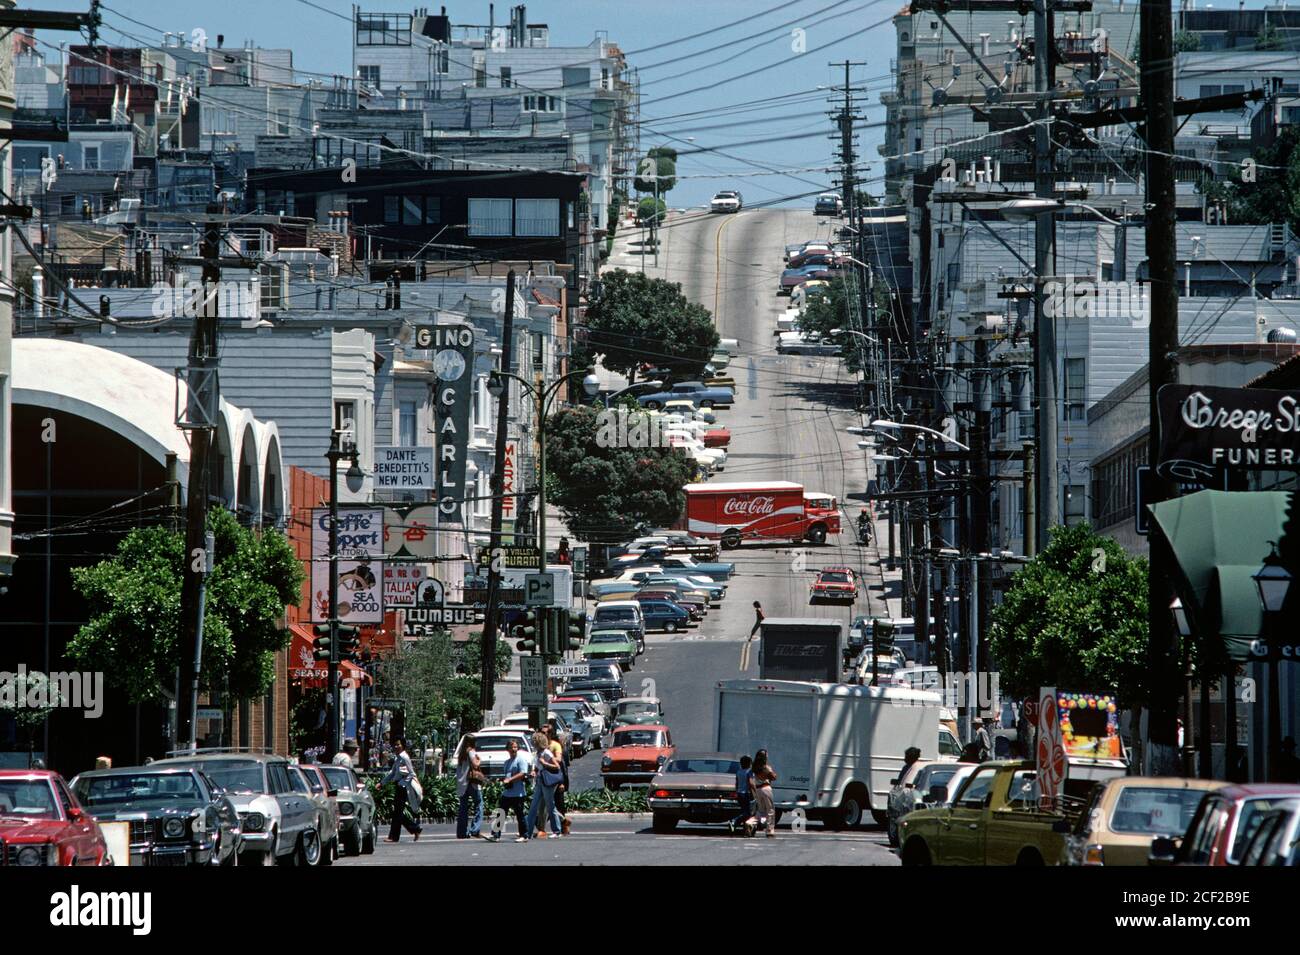 STREETS OF SAN FRANCISCO WITH COCA COLA TRUCK, CALIFORNIA, USA, 1970s Stock Photo